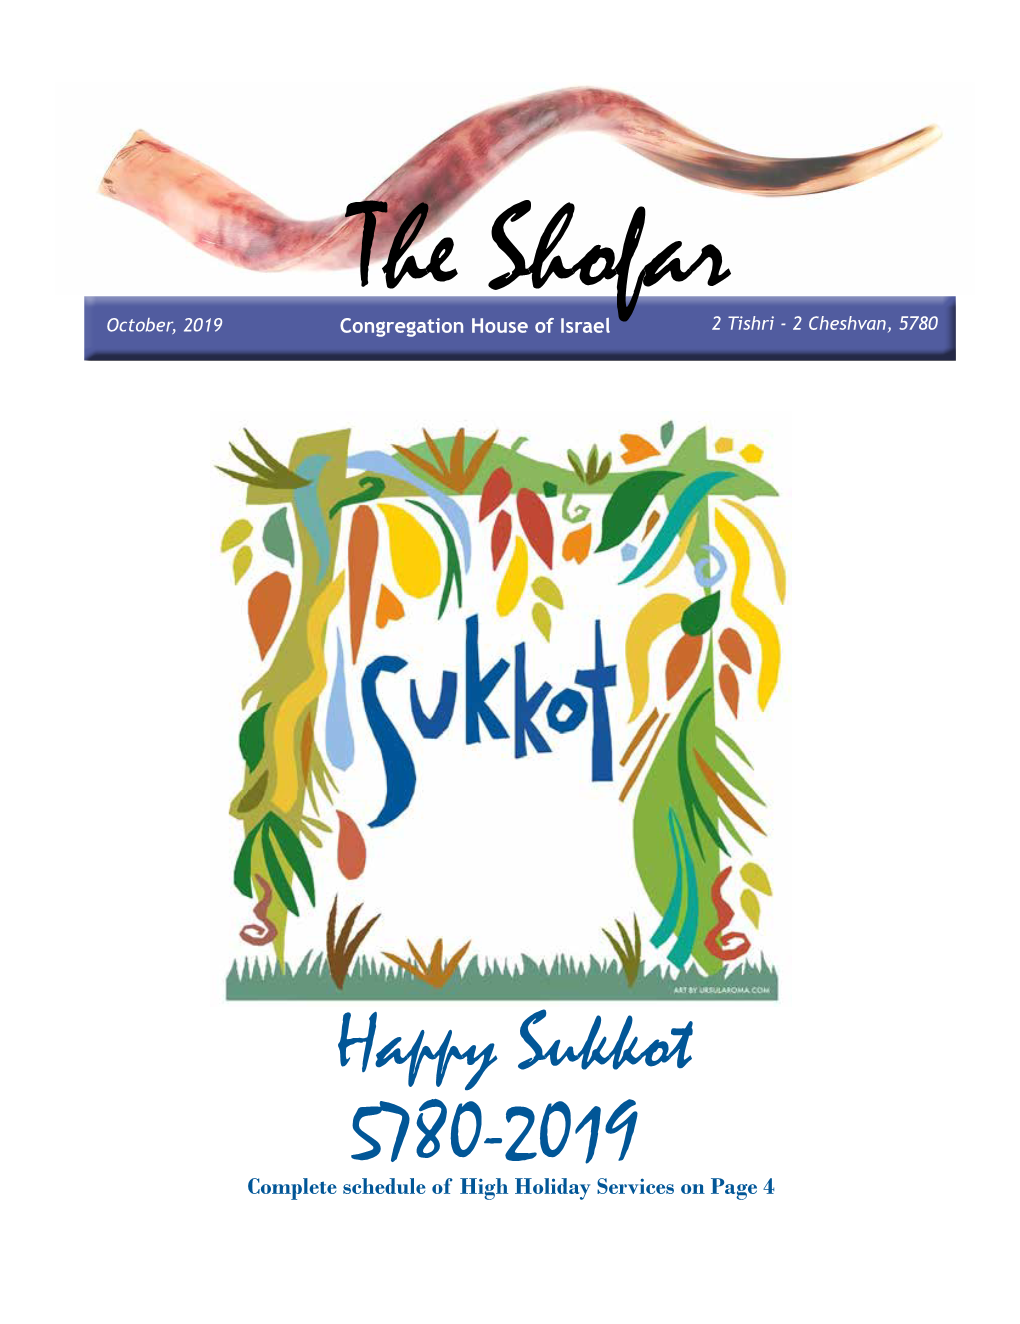 Happy Sukkot 5780-2019